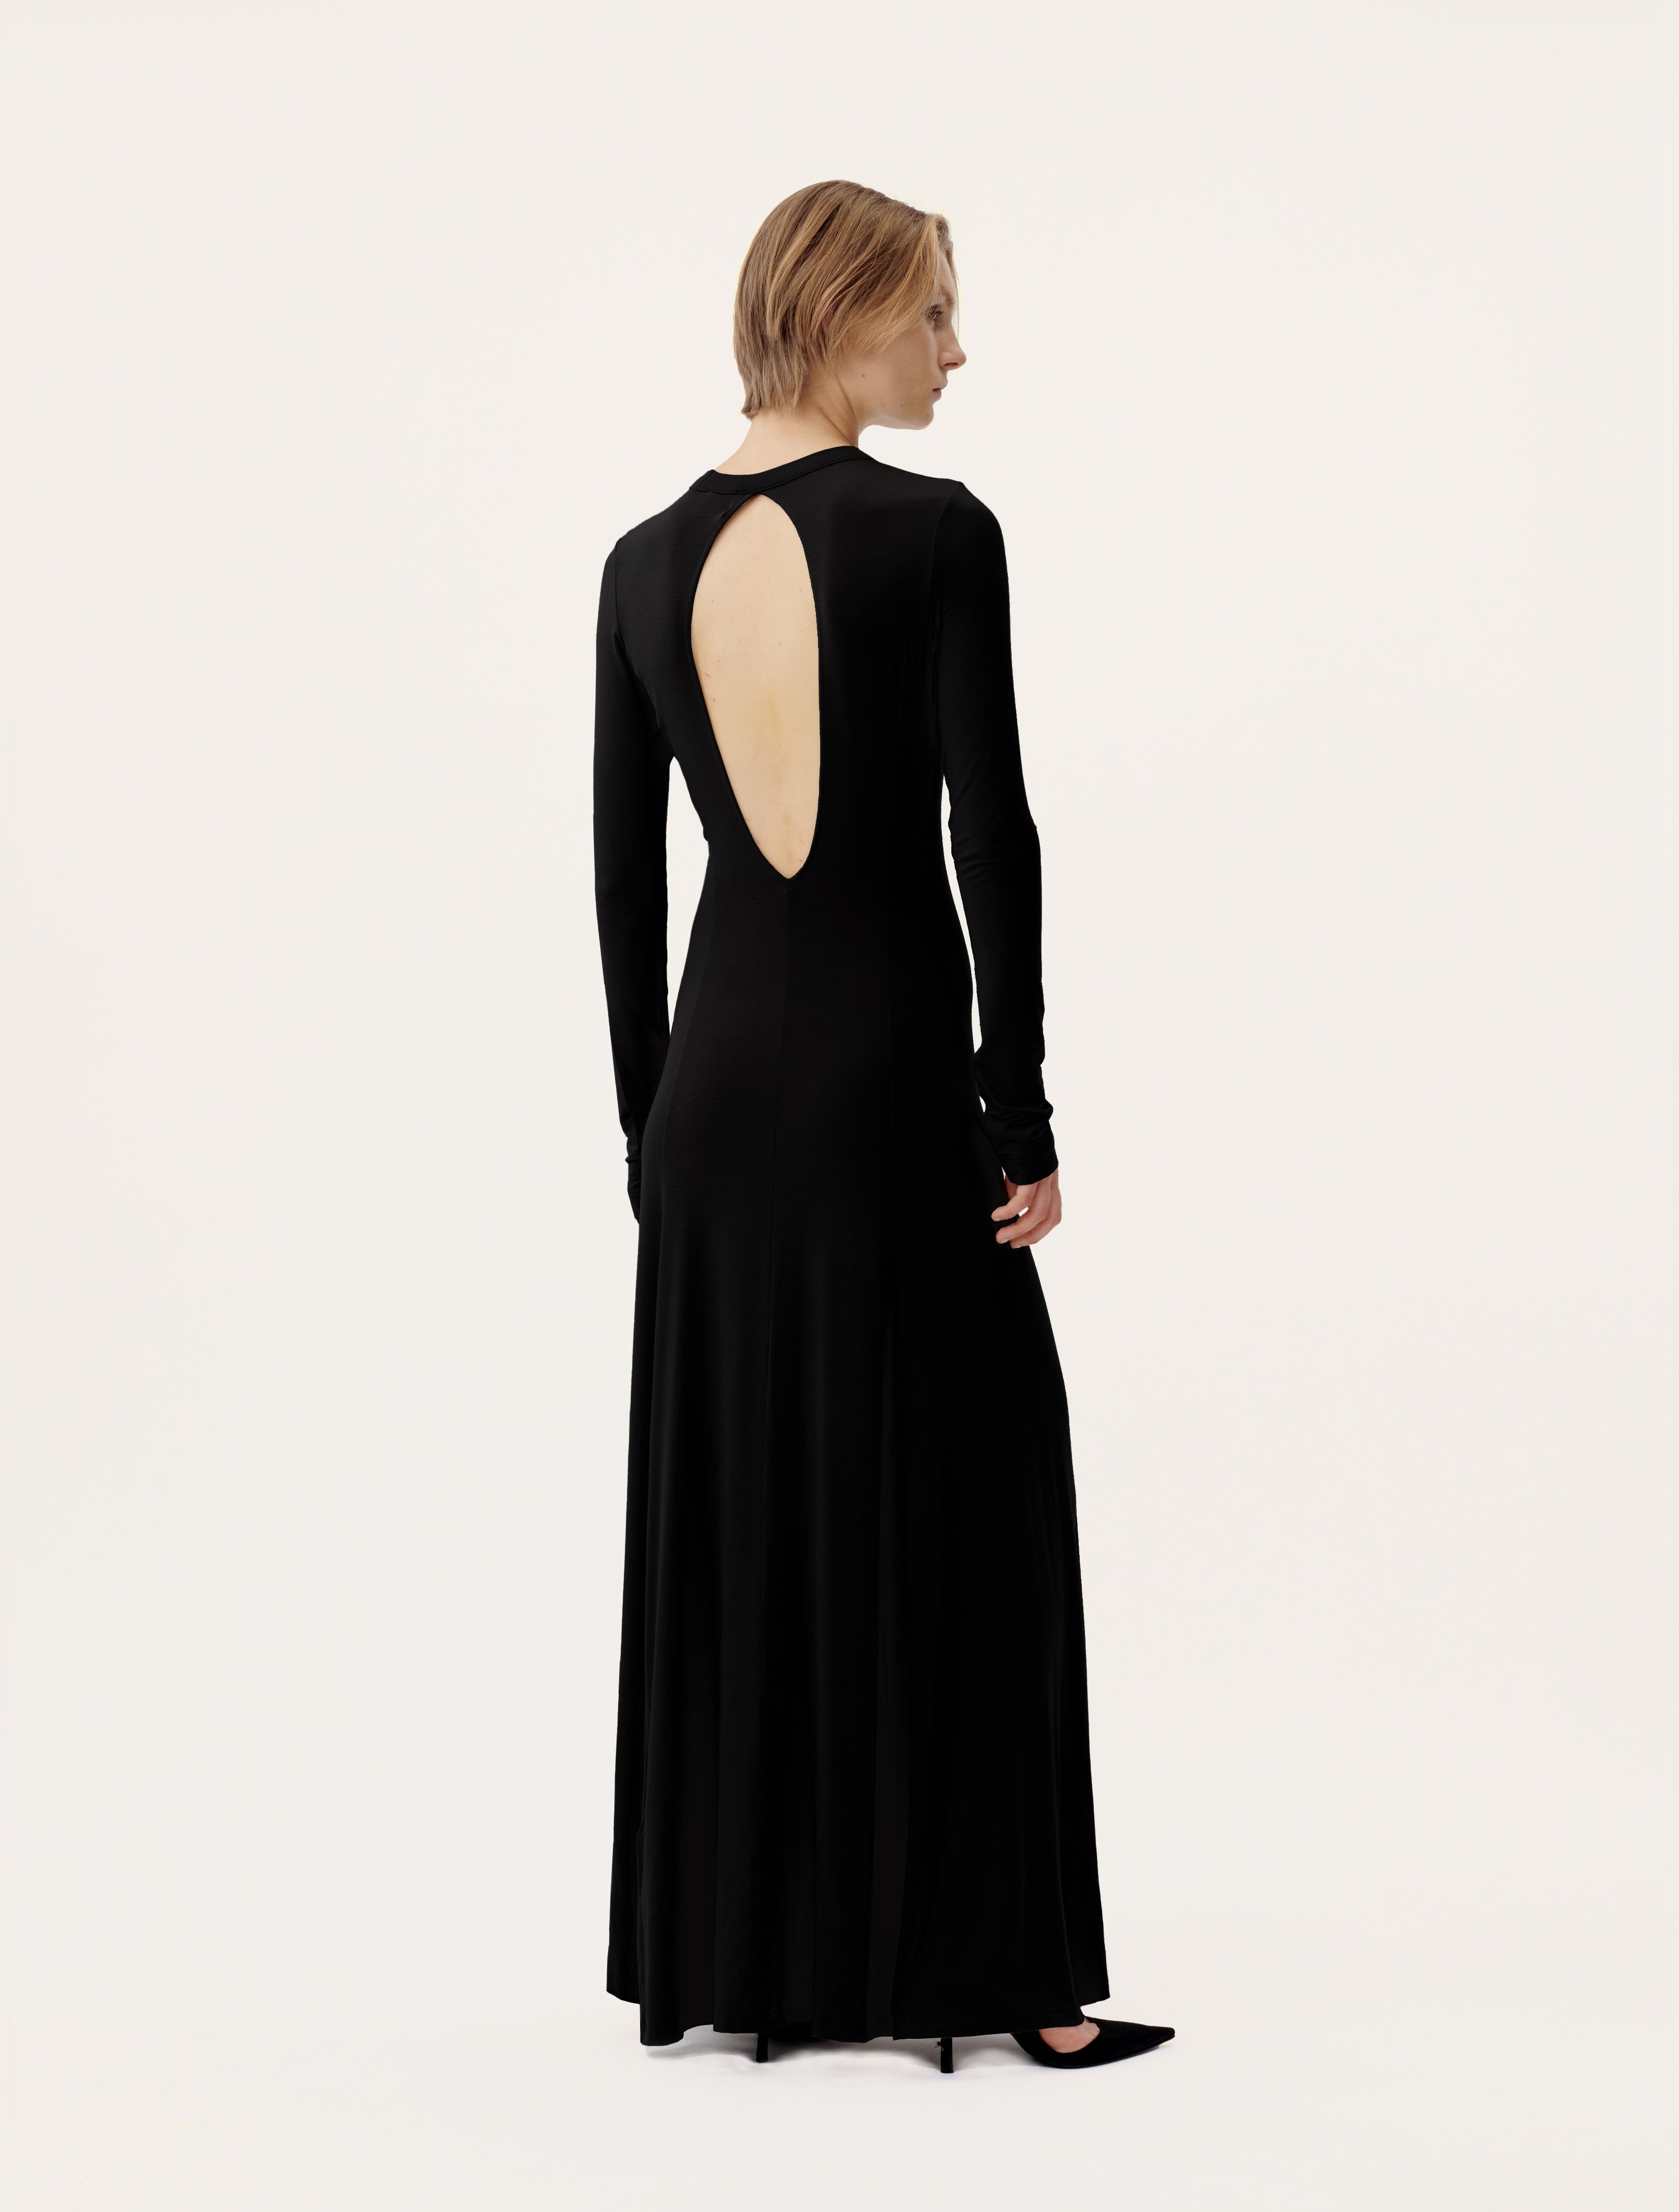 Ninety Percent Anteros Dress in Black